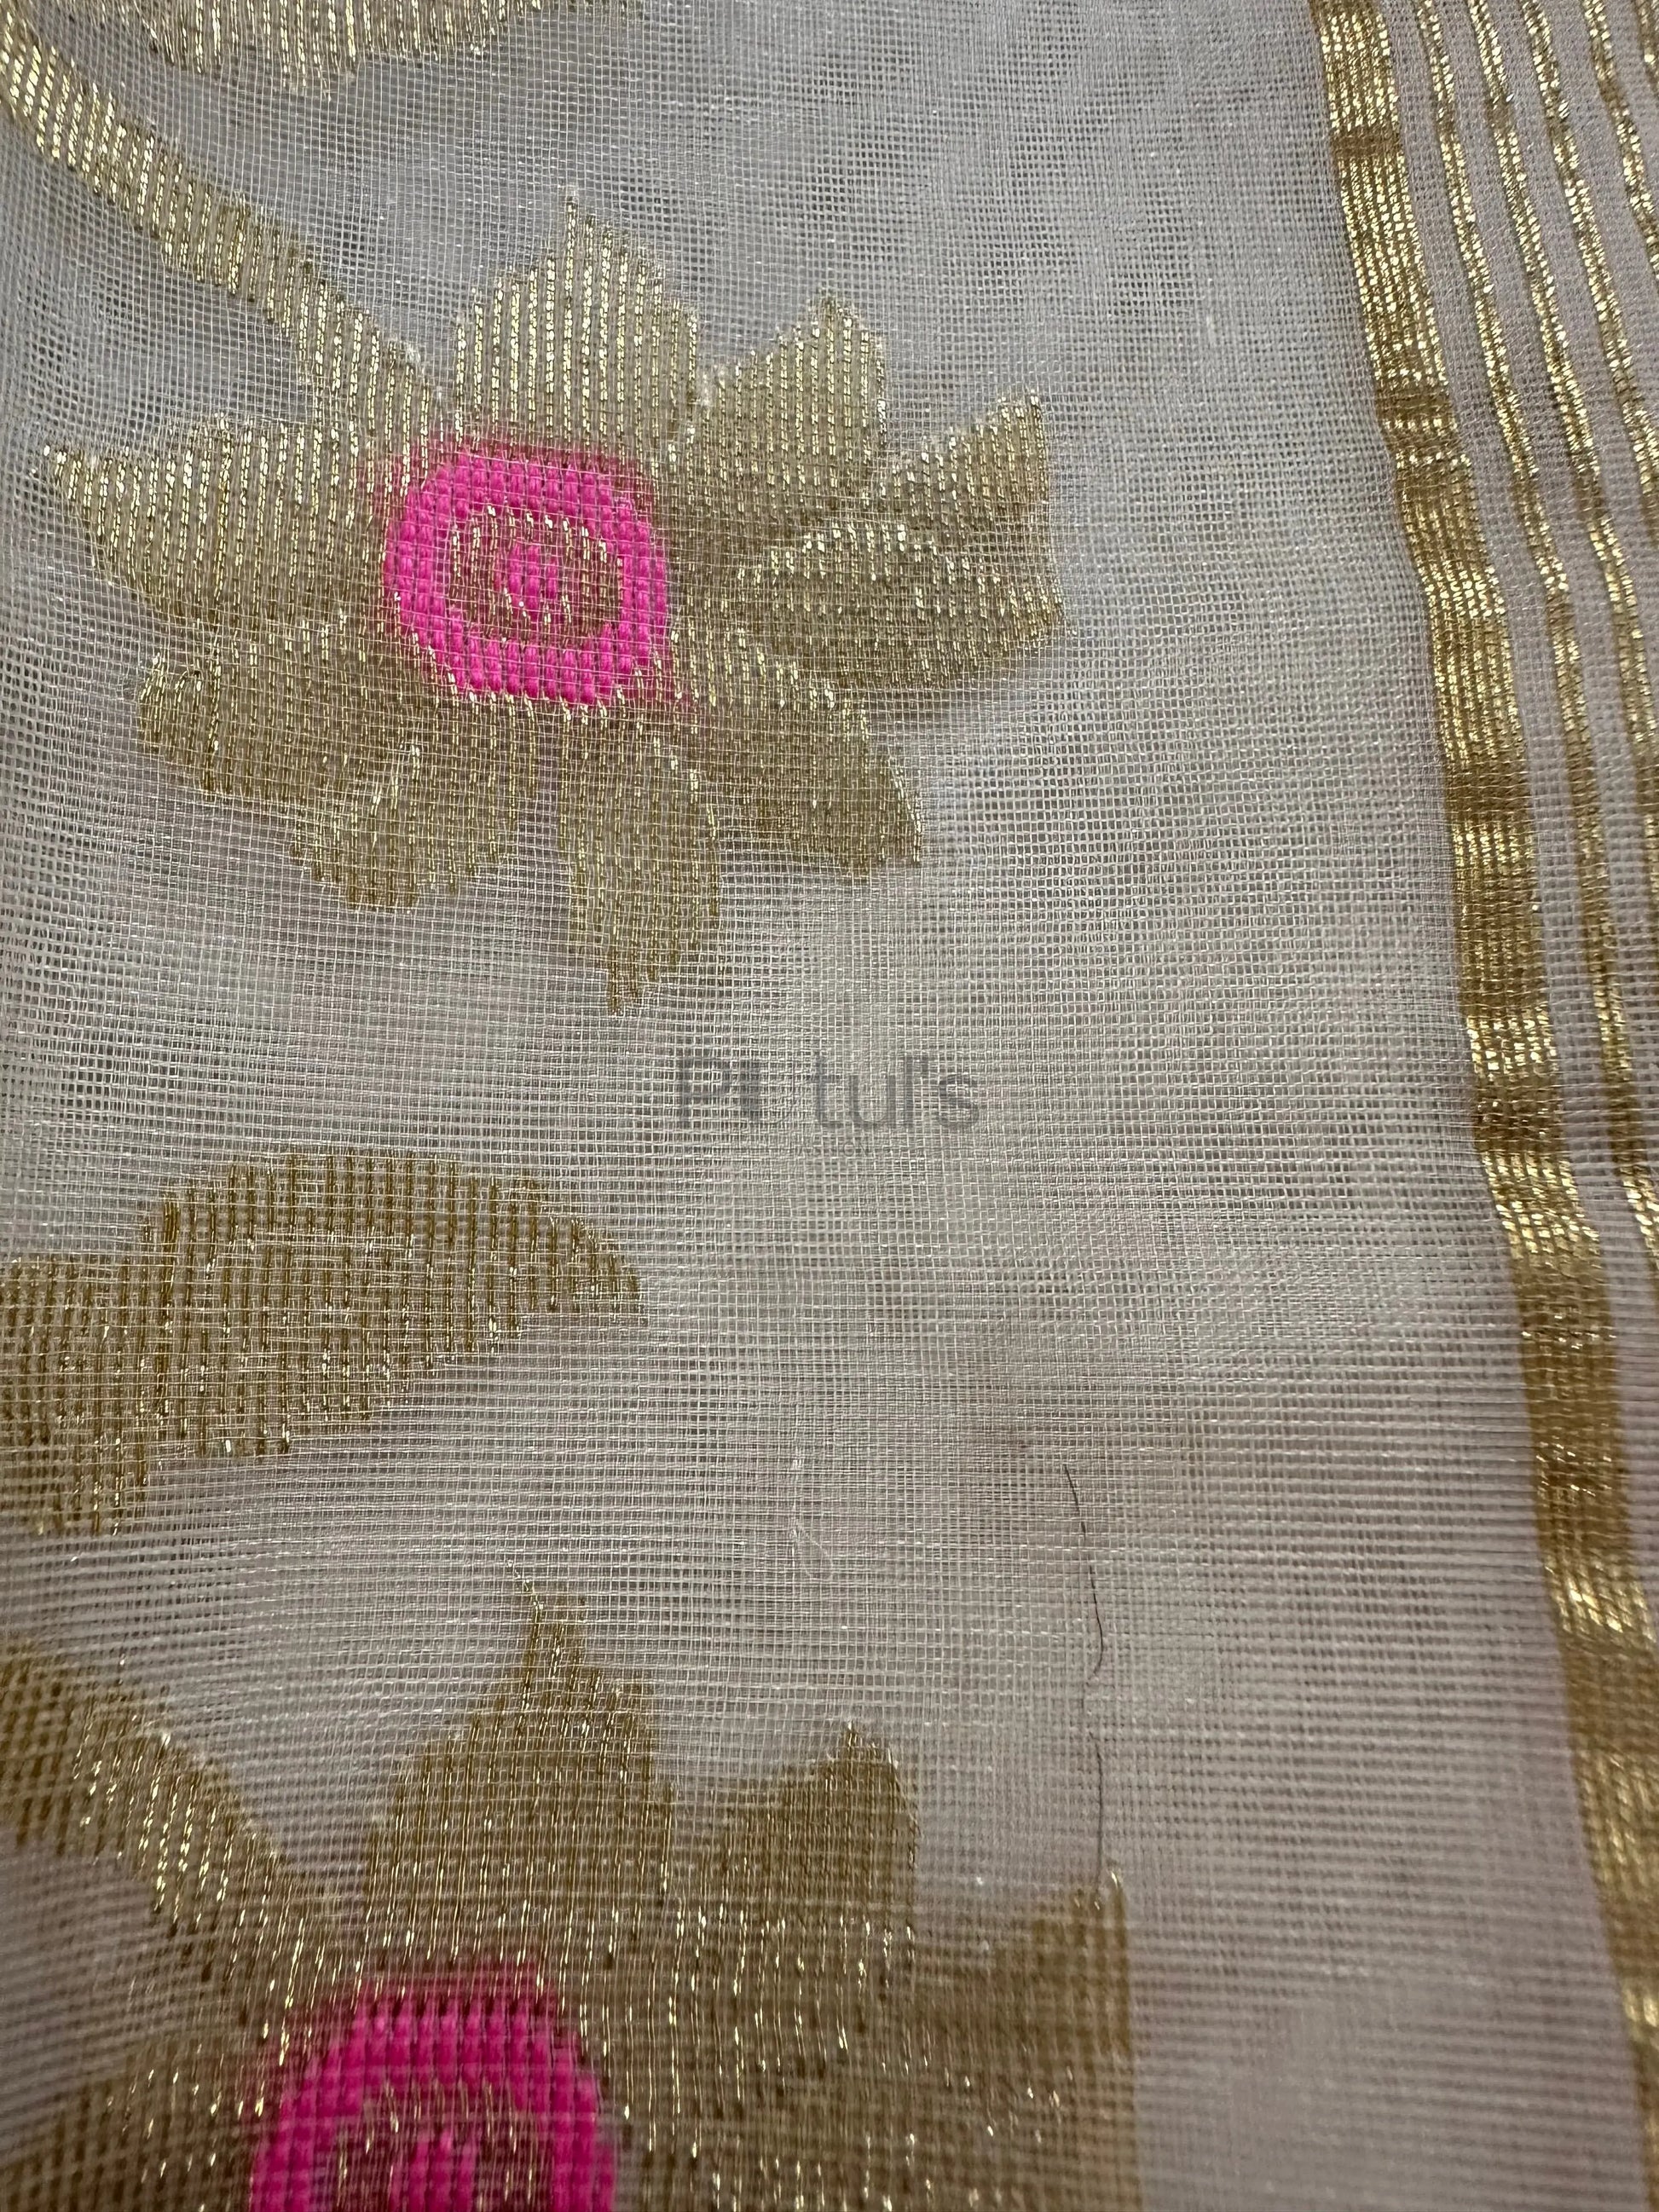 white coloured Muslin saree with pink minakari Putul's Fashion